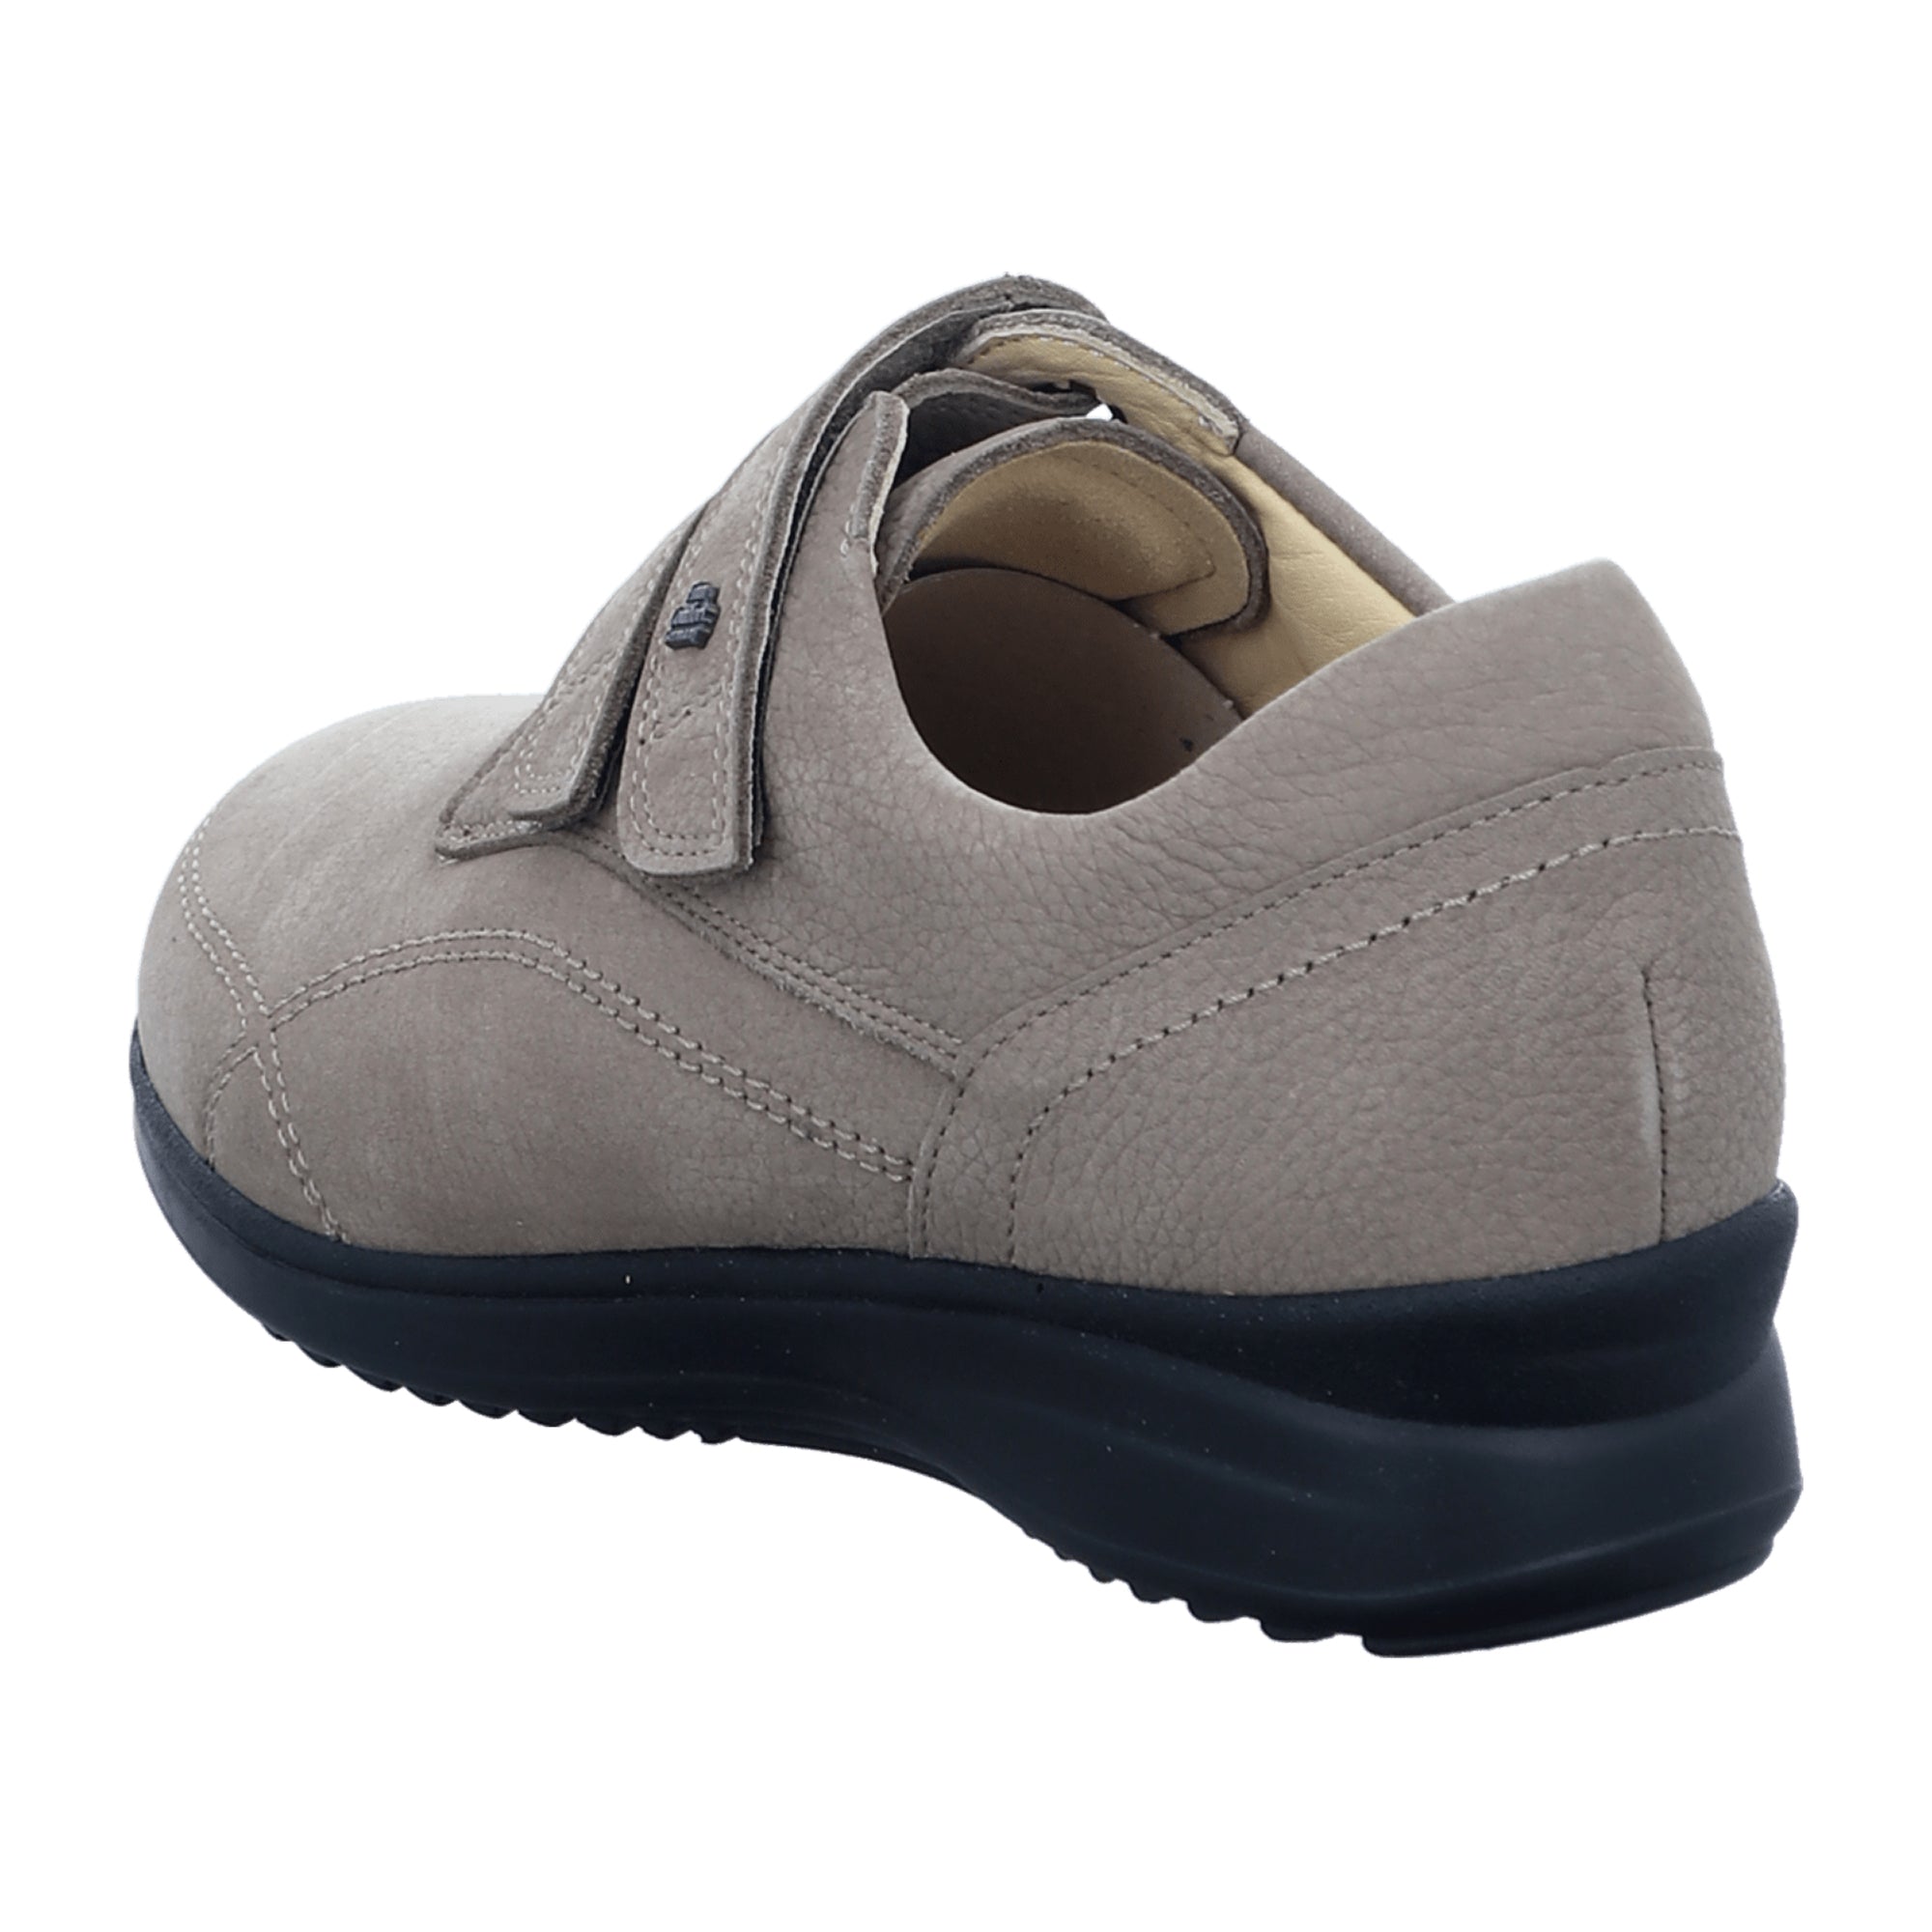 Finn Comfort 96522 Women's Comfort Shoes - Stylish Beige Leather, Orthopedic Support